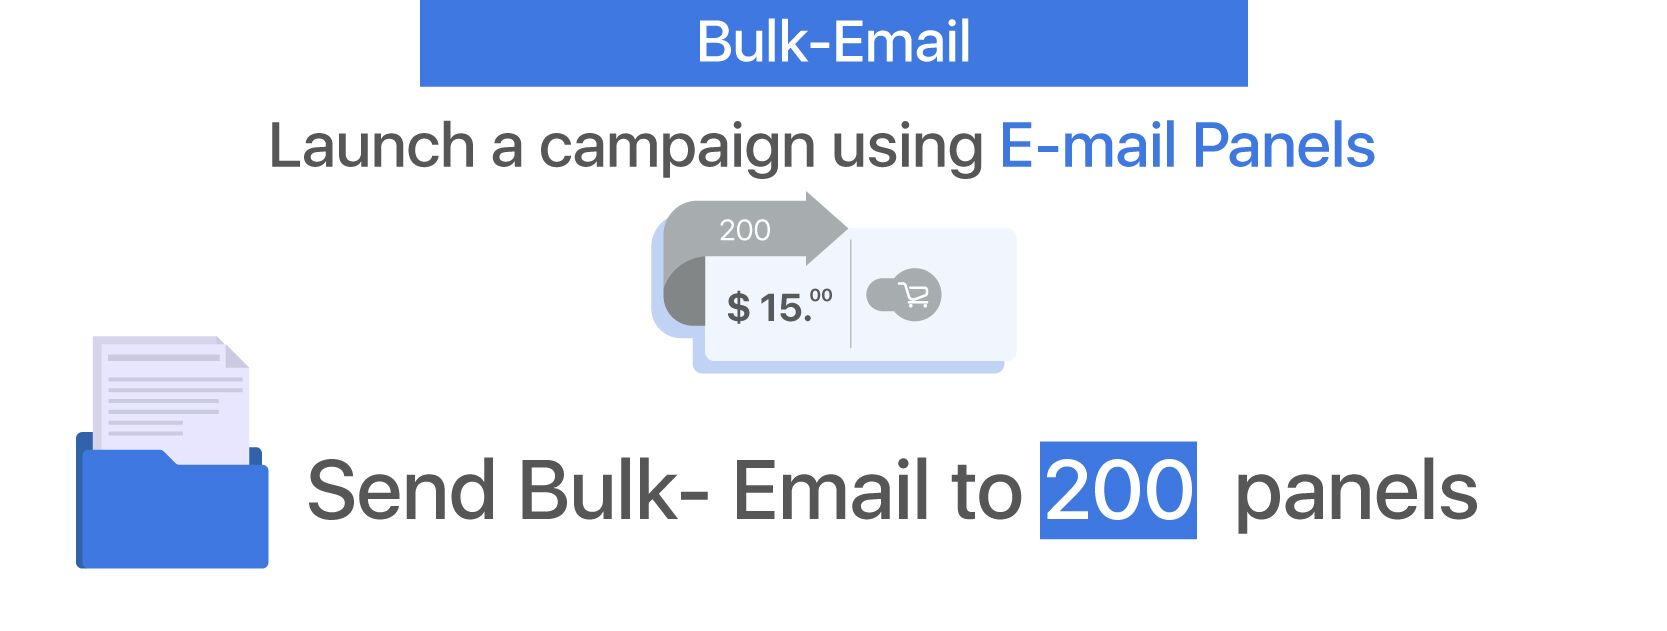 Bulk-Email - 200 Panels